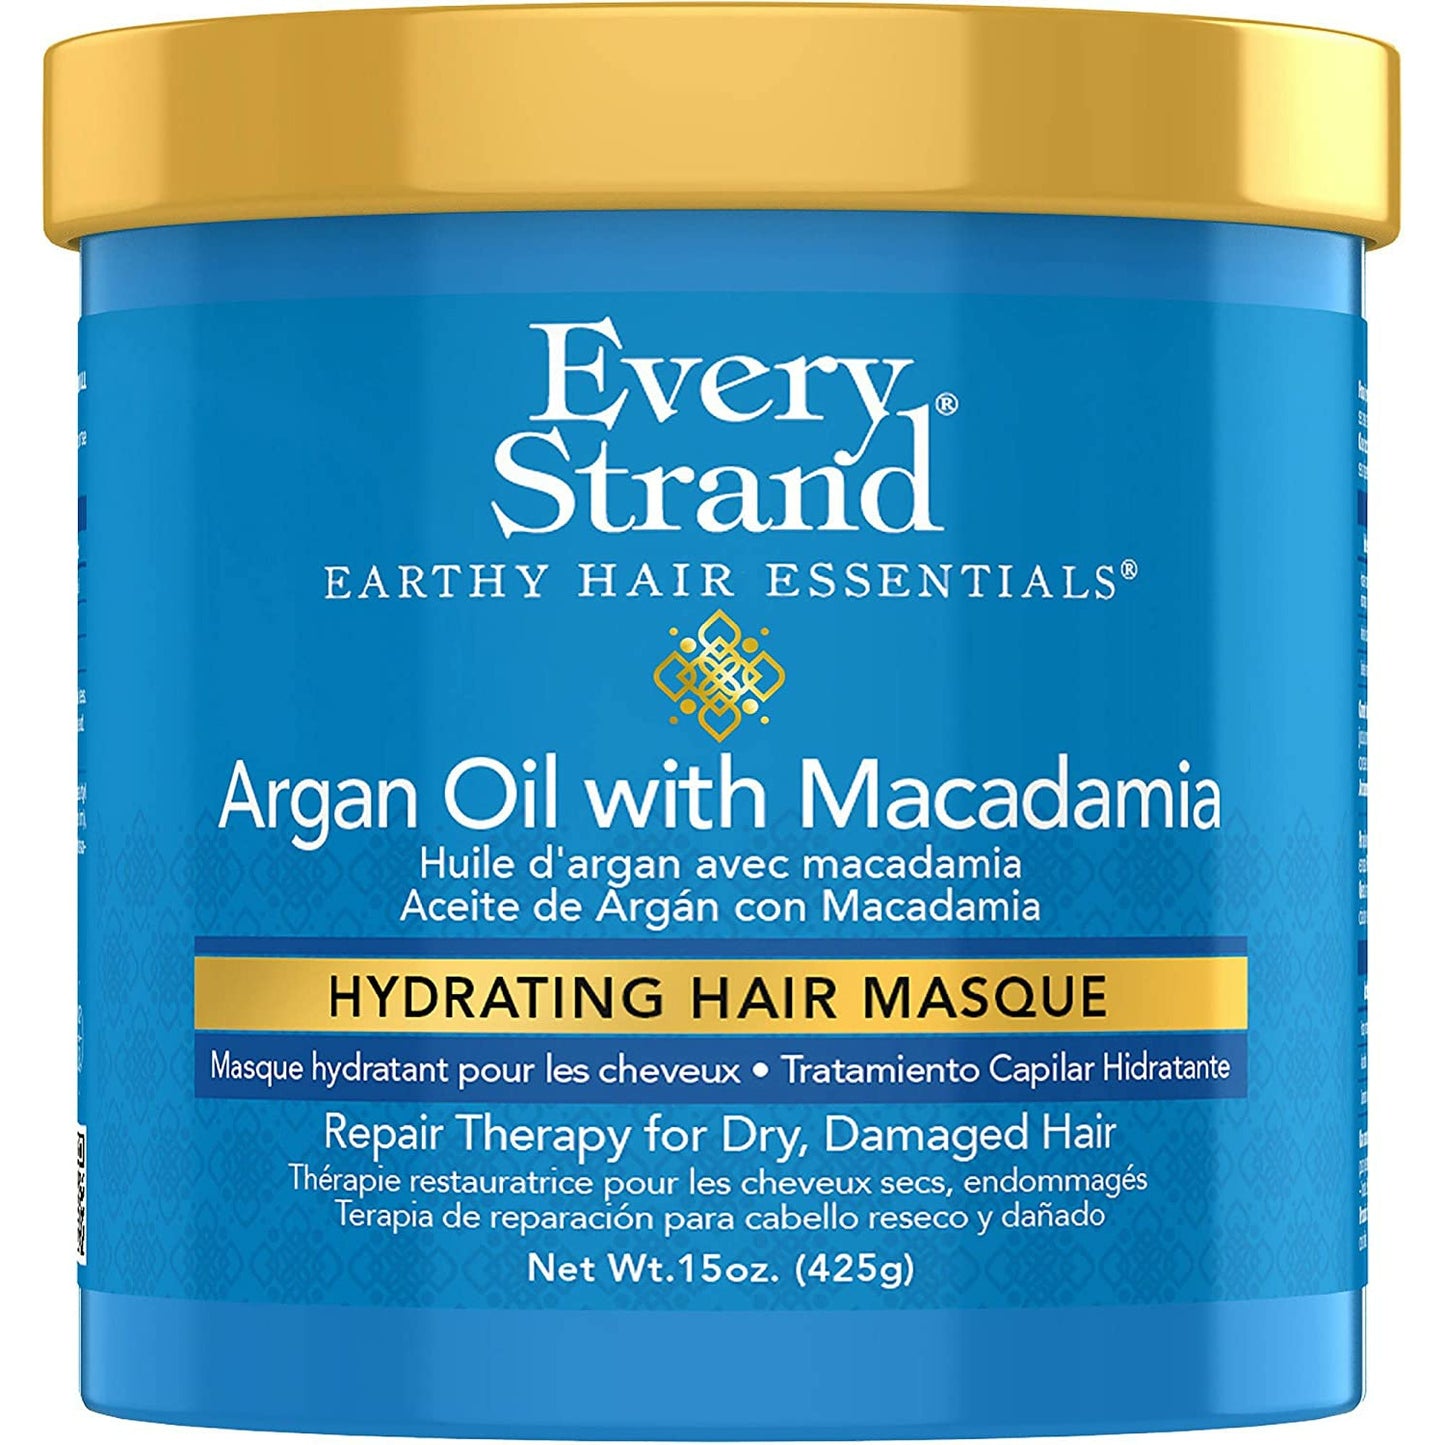 Every Strand Argan Oil With Macadamia Hydrating Hair Masque, 15 Oz